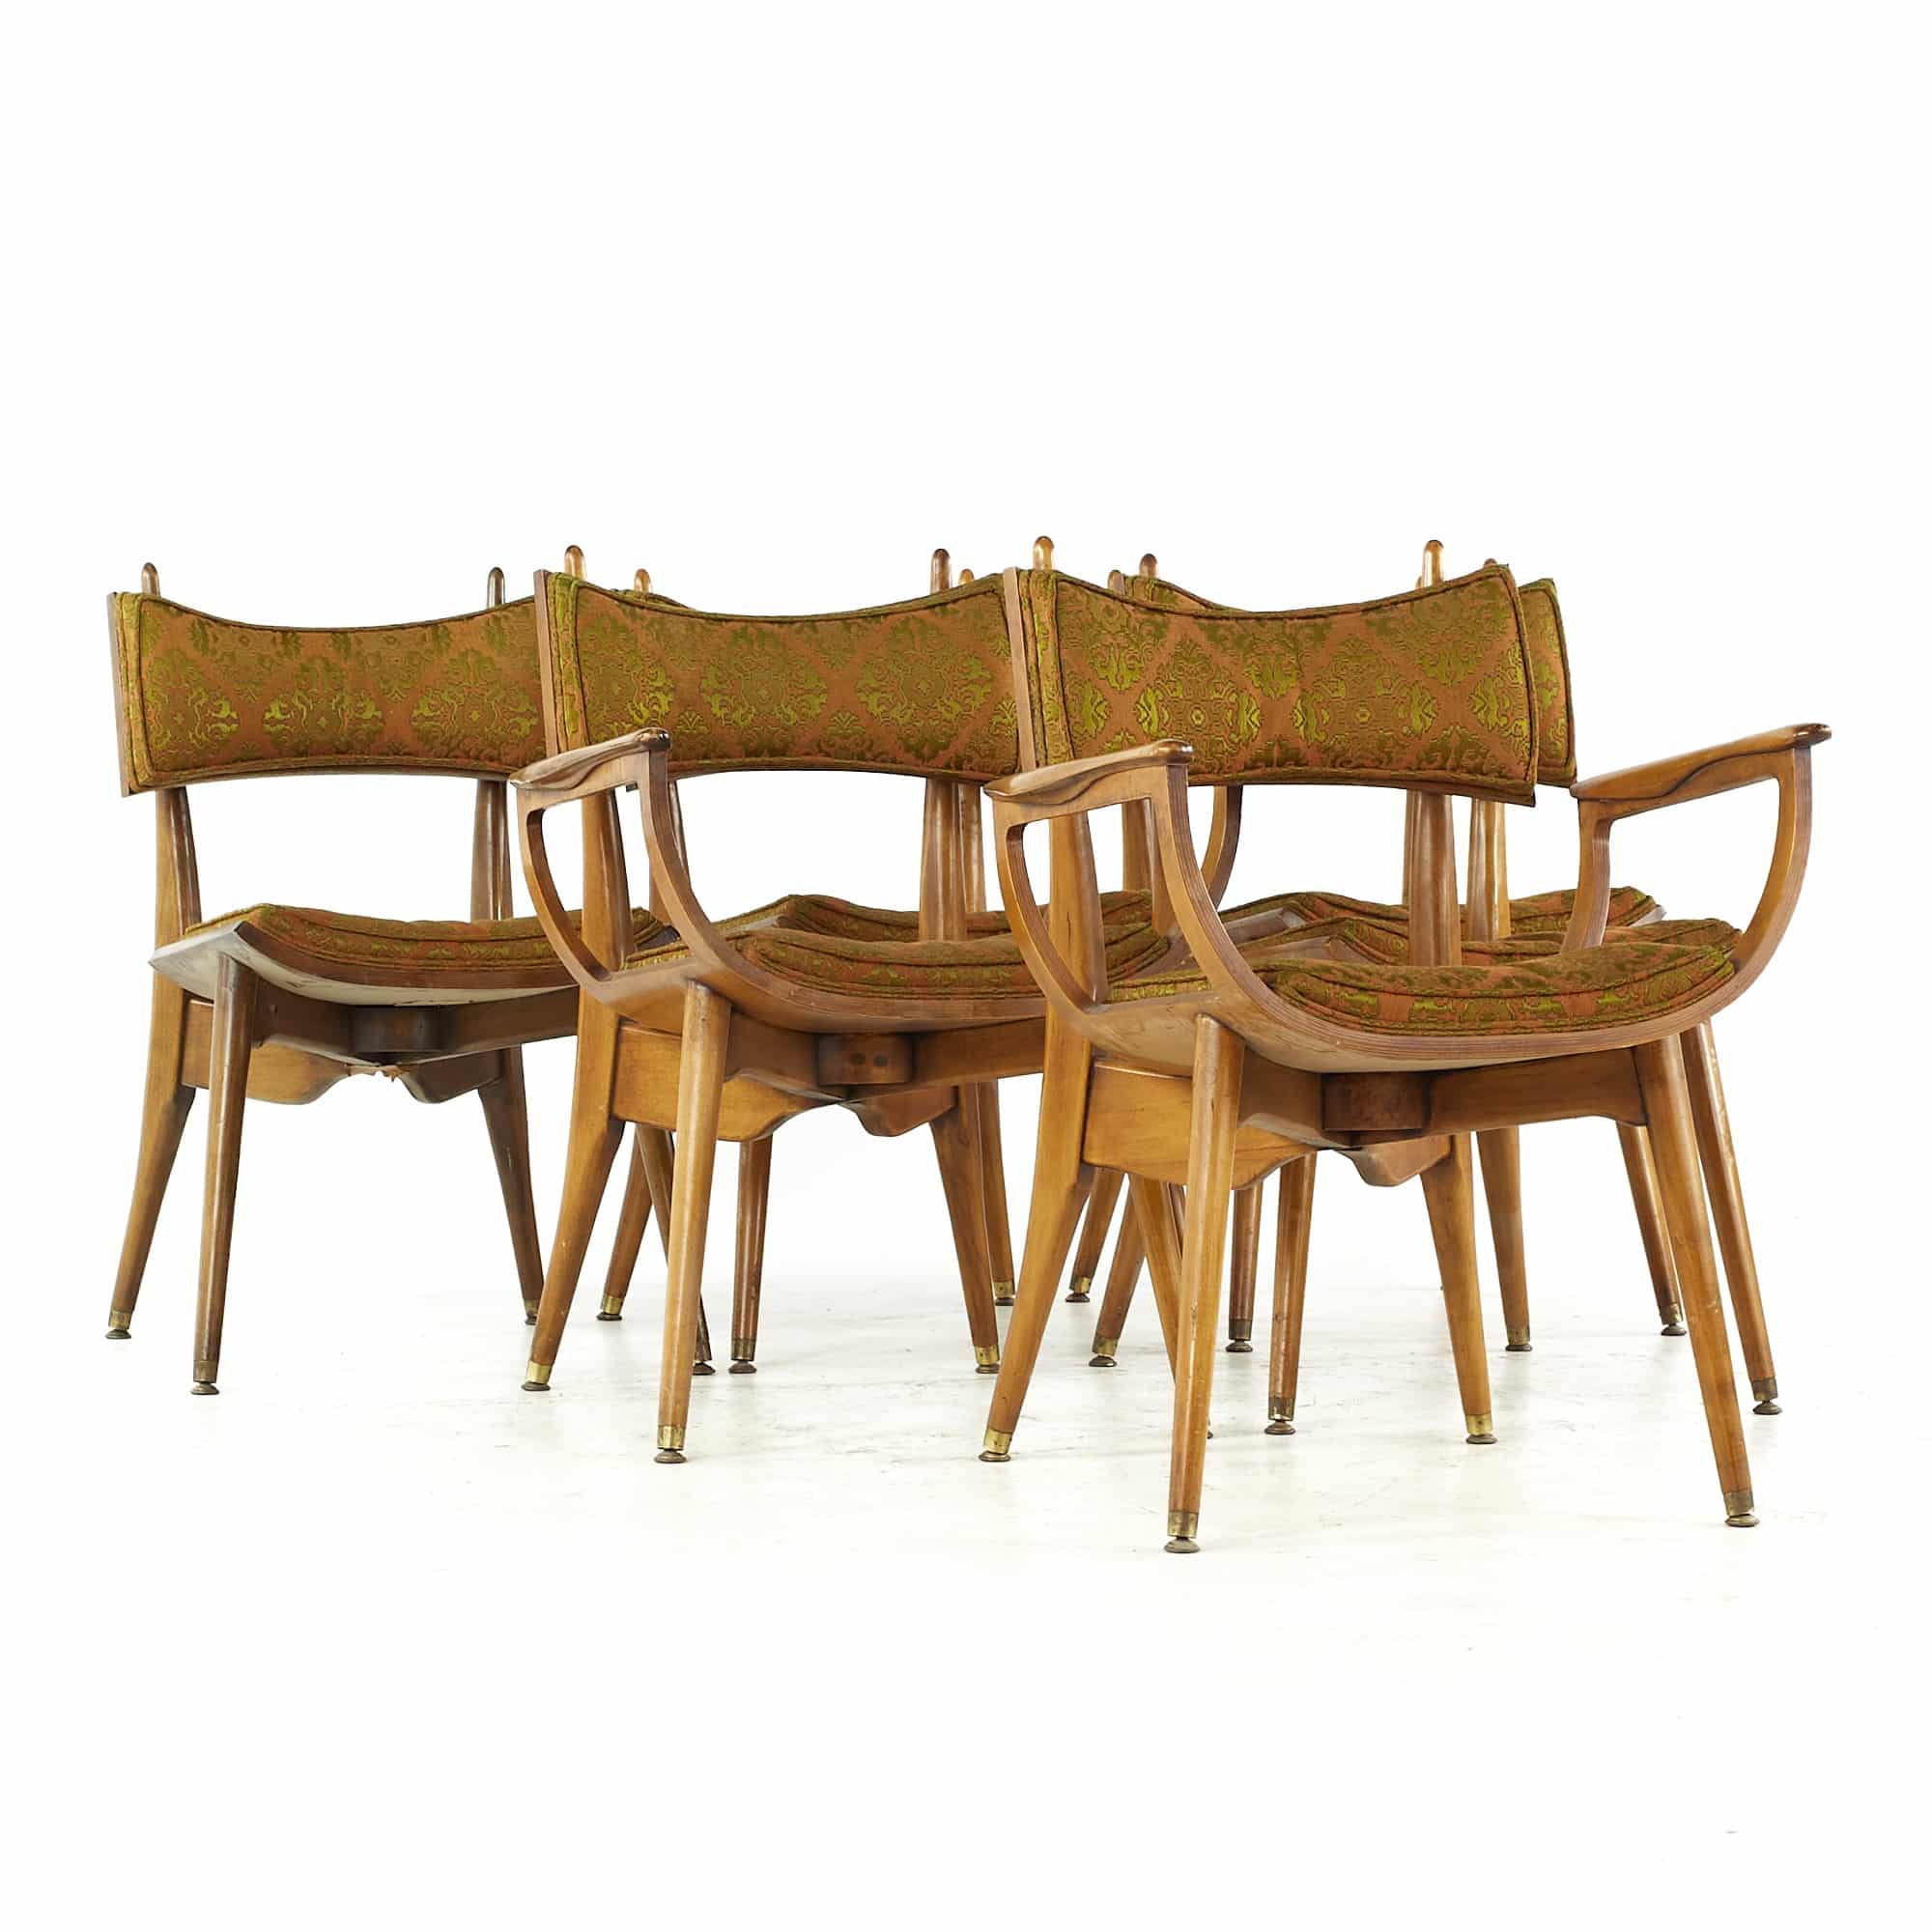 Romweber Mid Century Dining Chairs - Set of 6